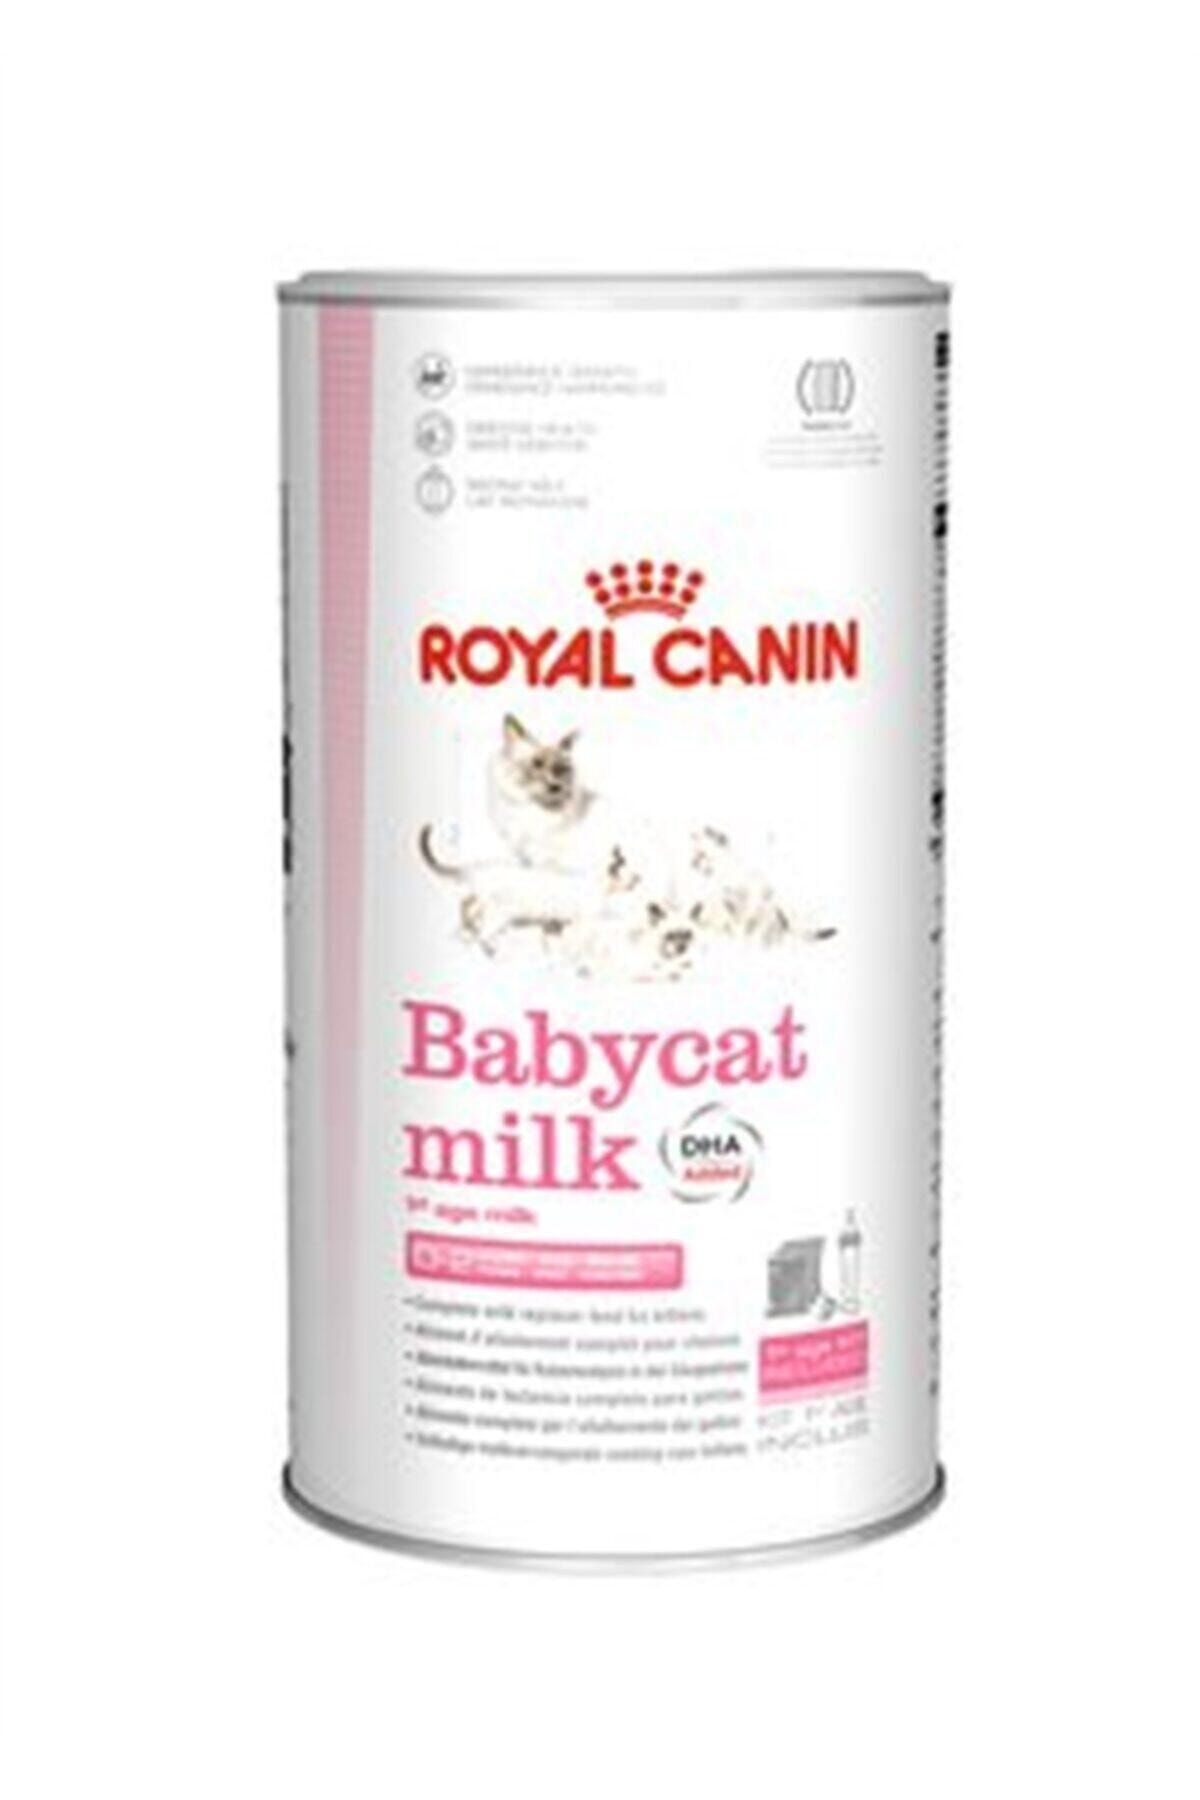 Royal Canin Babycat Milk (Anne Sütü)